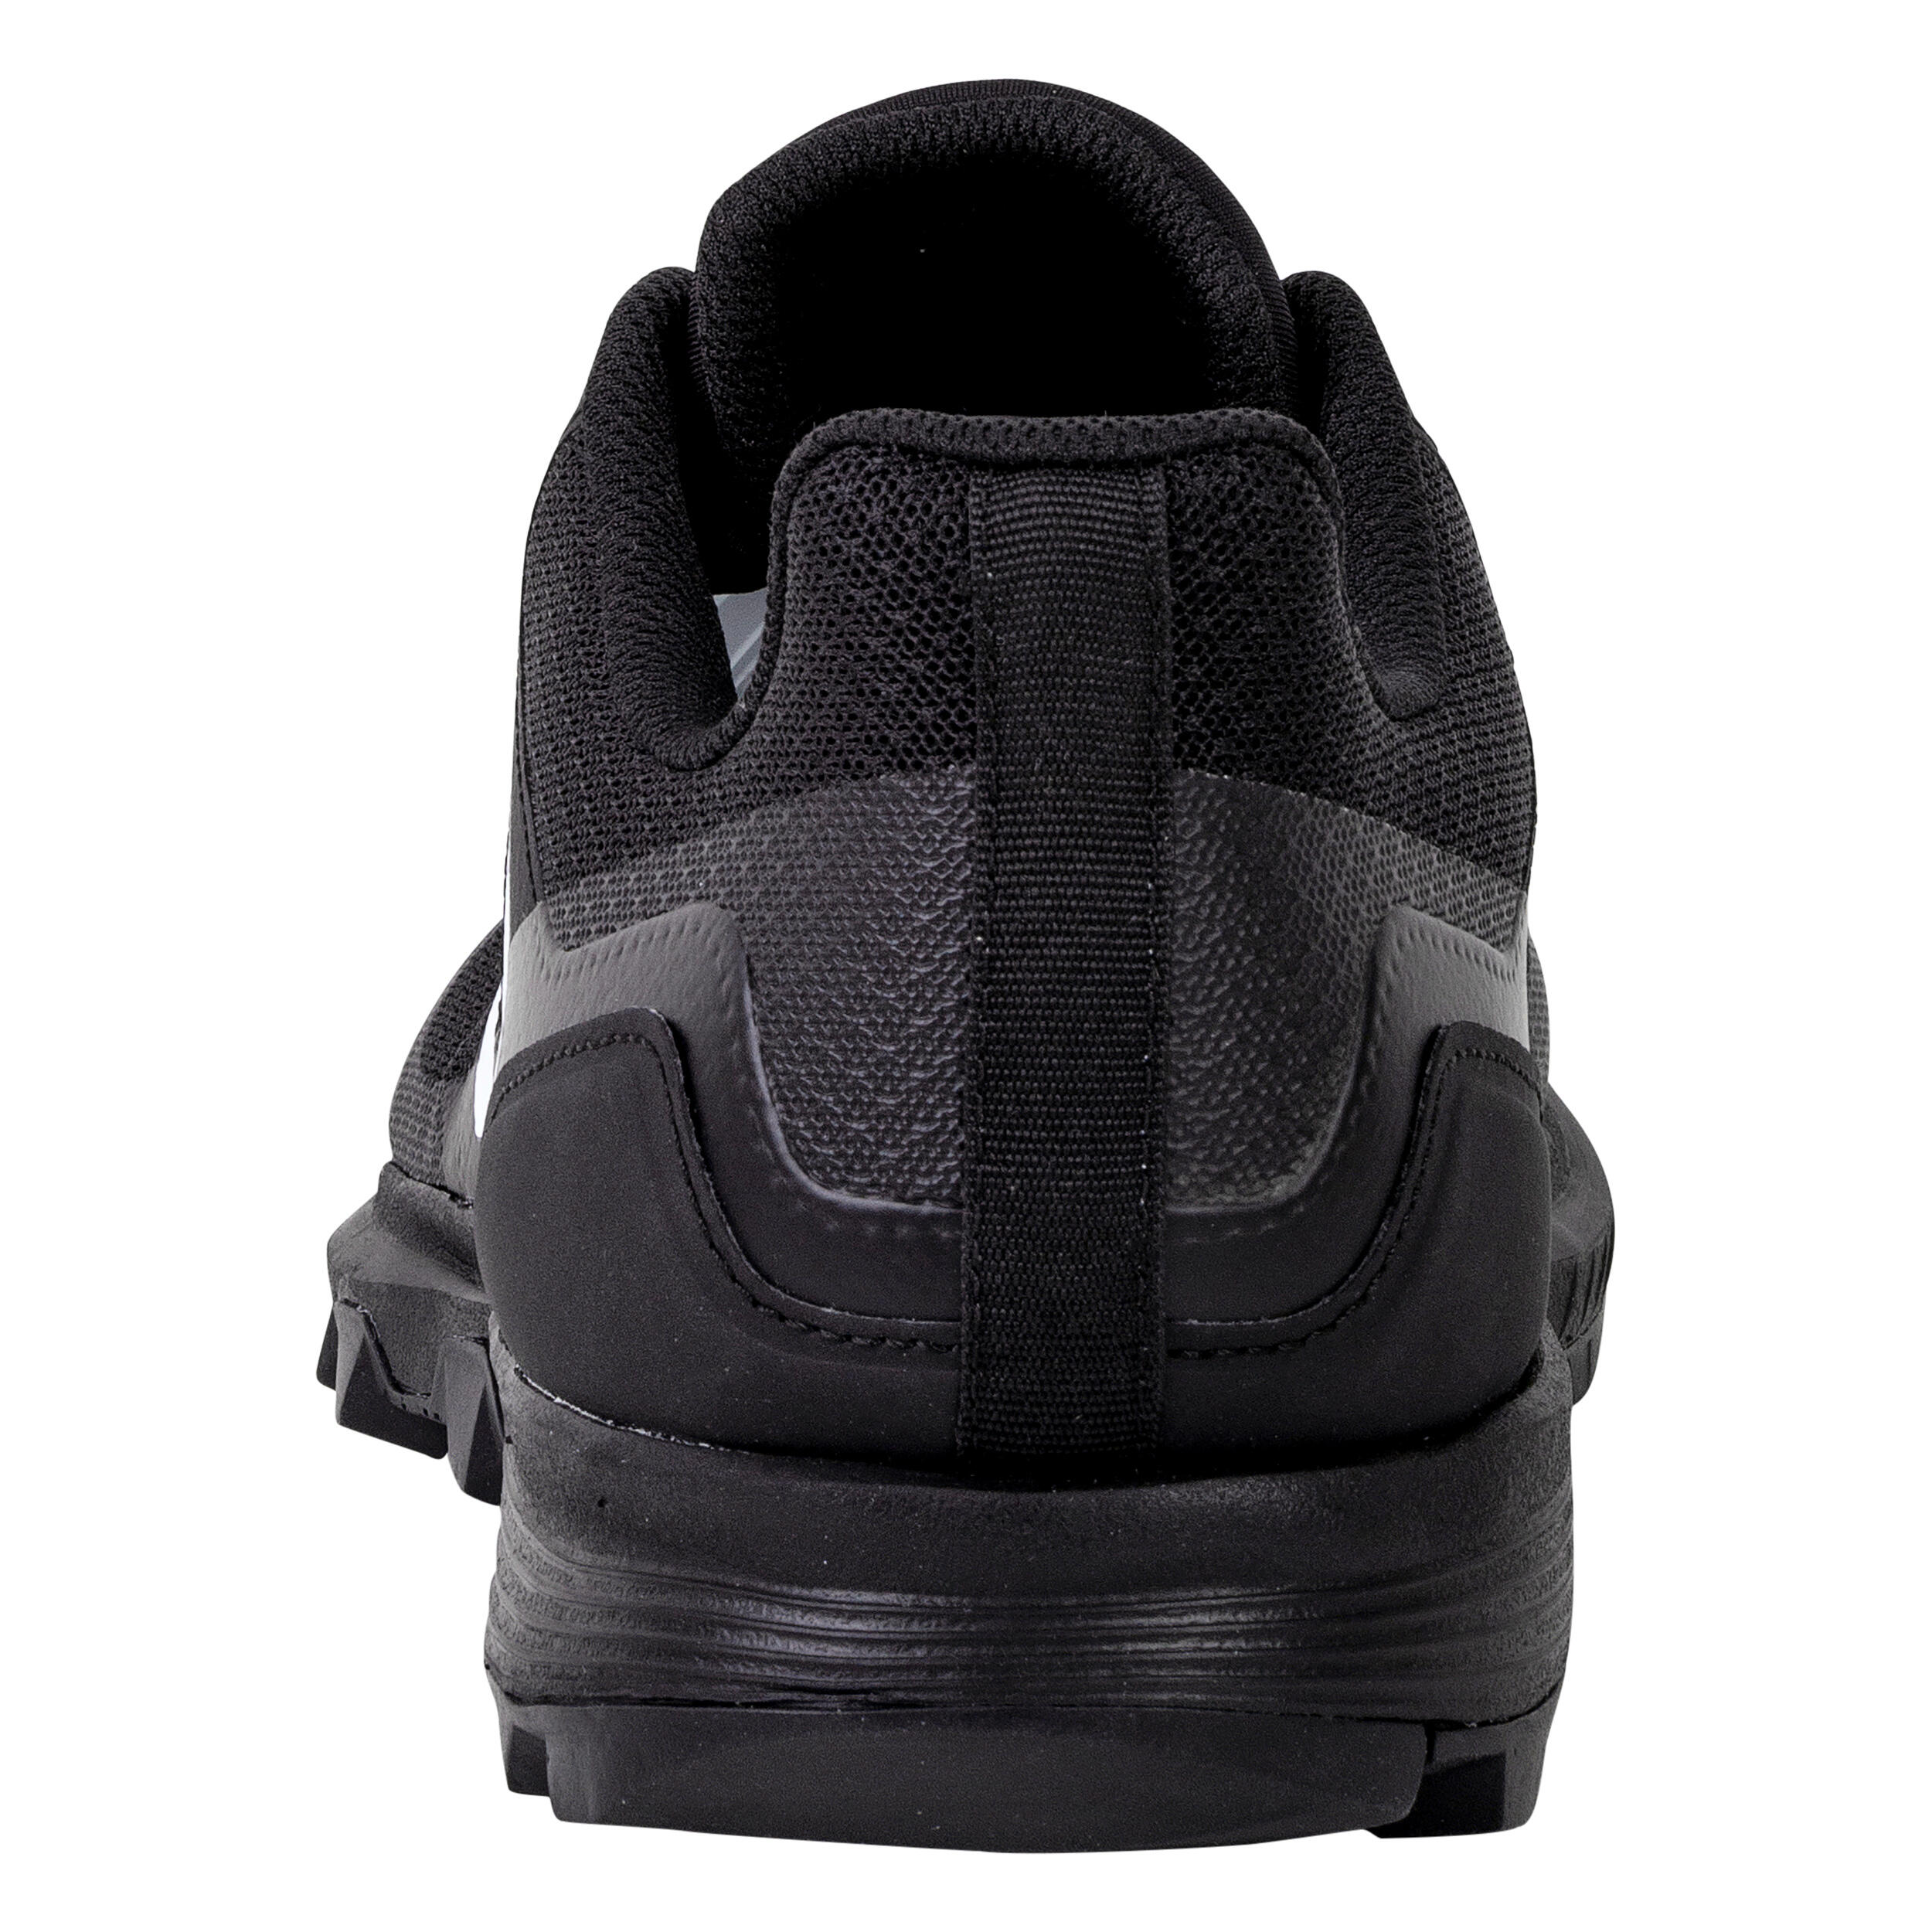 Men's Moderate- to High-Intensity Field Hockey Shoes Flexcloud - Black 5/7